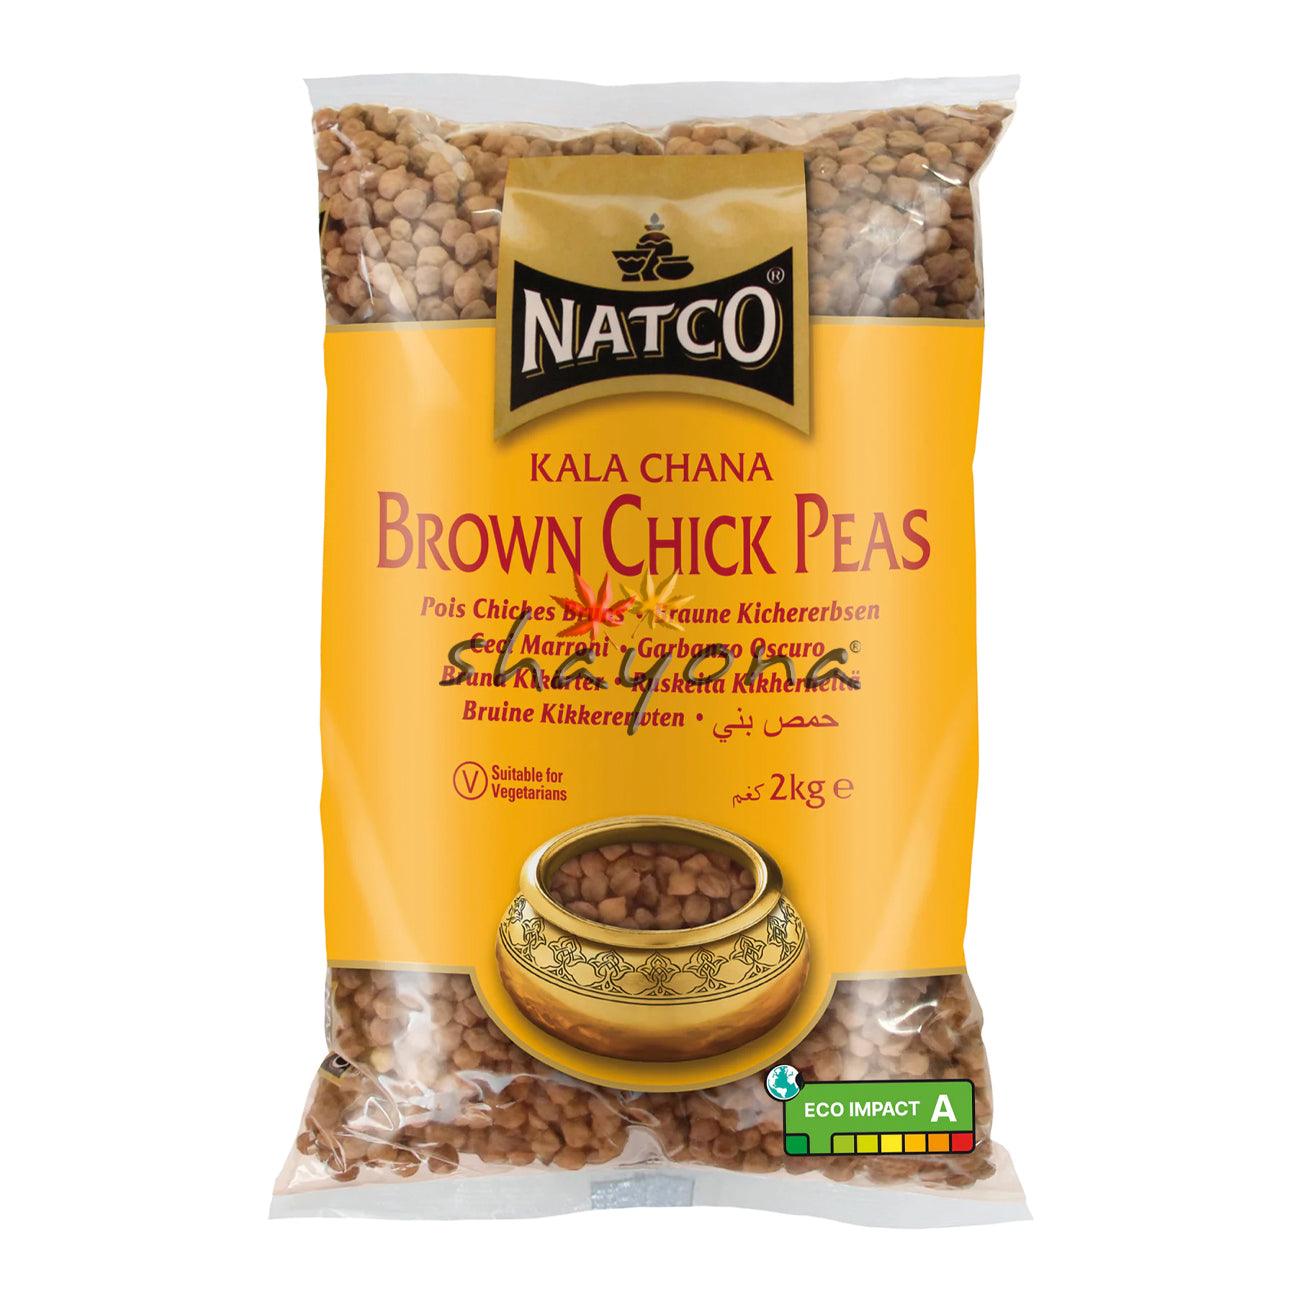 Natco Brown Chick Peas - Shayona UK